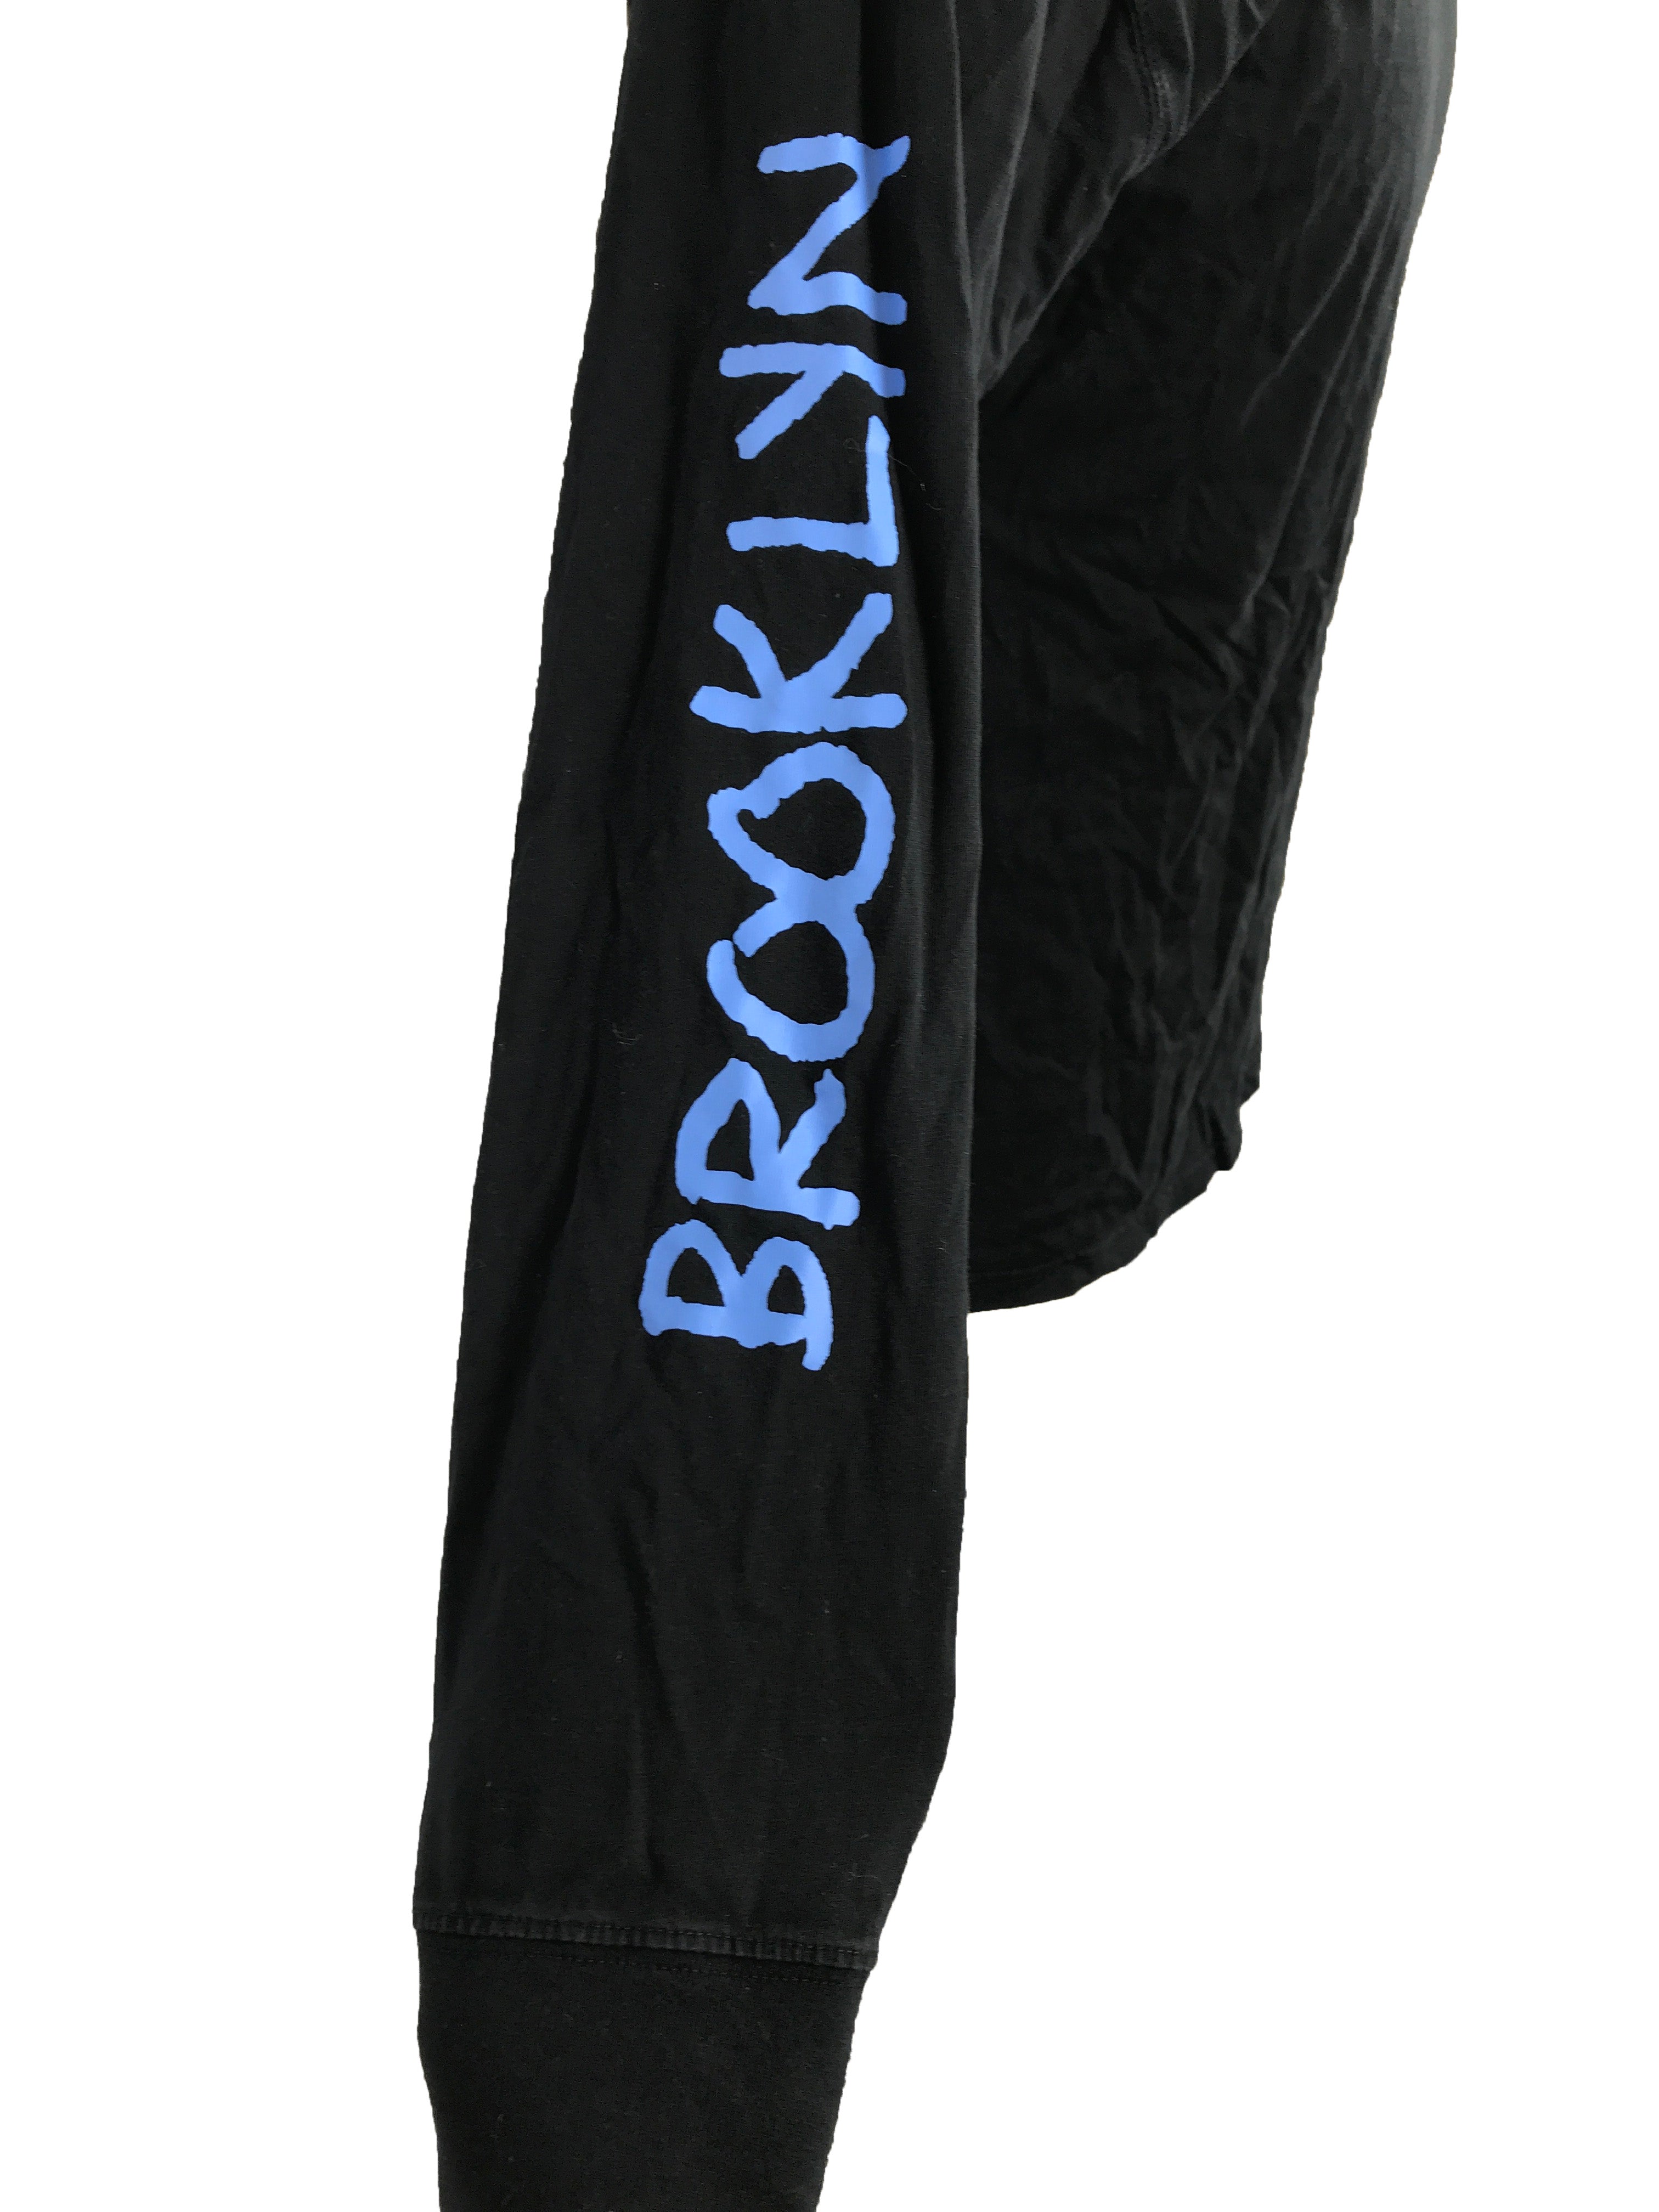 brooklyn nets apparel amazon